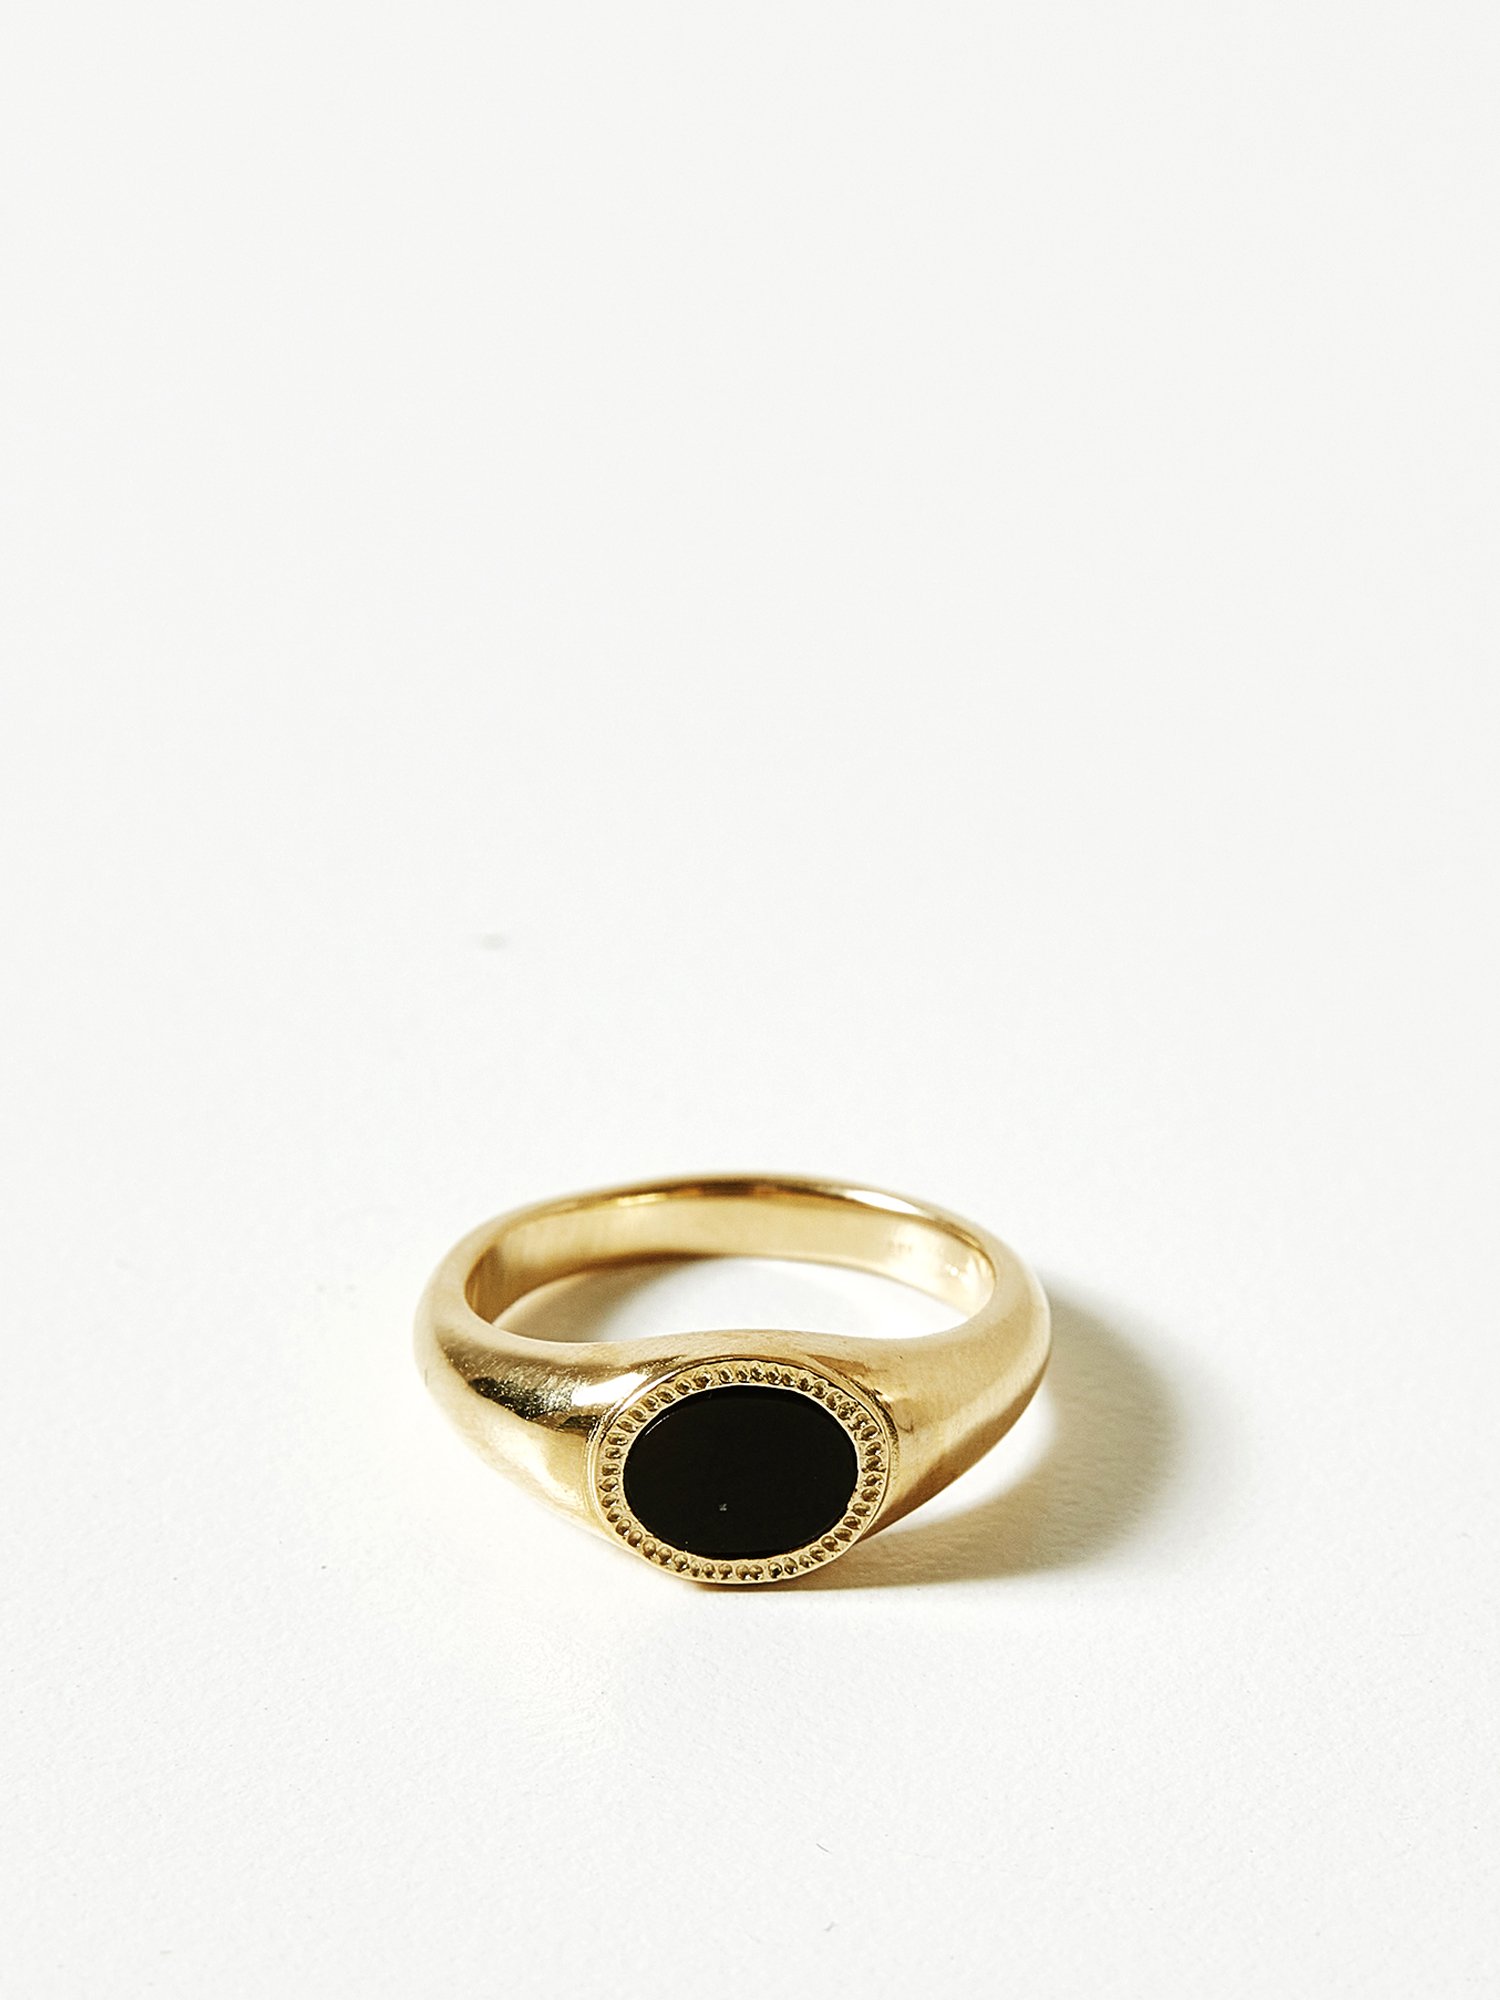 HELIOS / Onyx signet ring ( small onyx )
